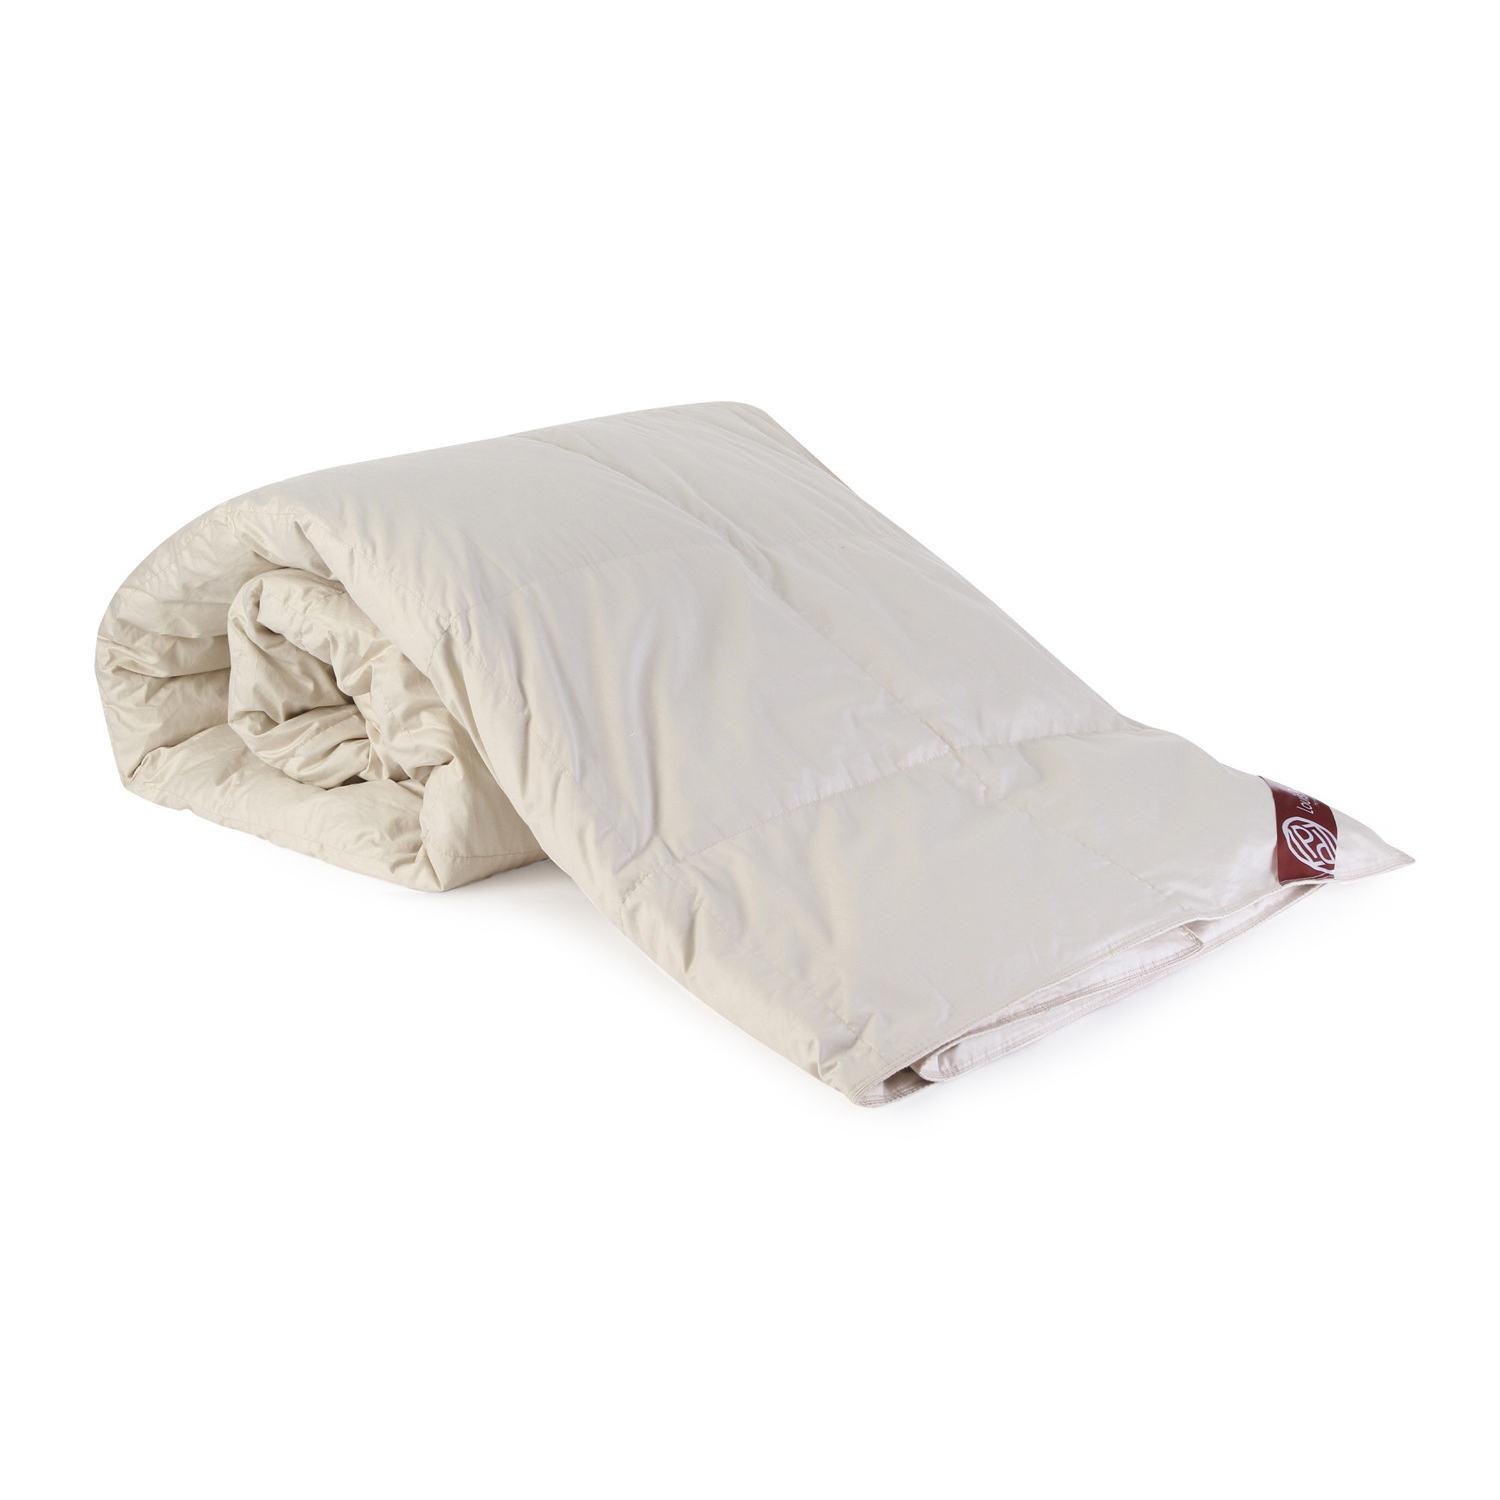 Пуховое одеяло Louis Pascal Николь бежевое 200х220 см (ЛП2022) пуховое одеяло louis pascal камилла белое 200х220 см лп2034